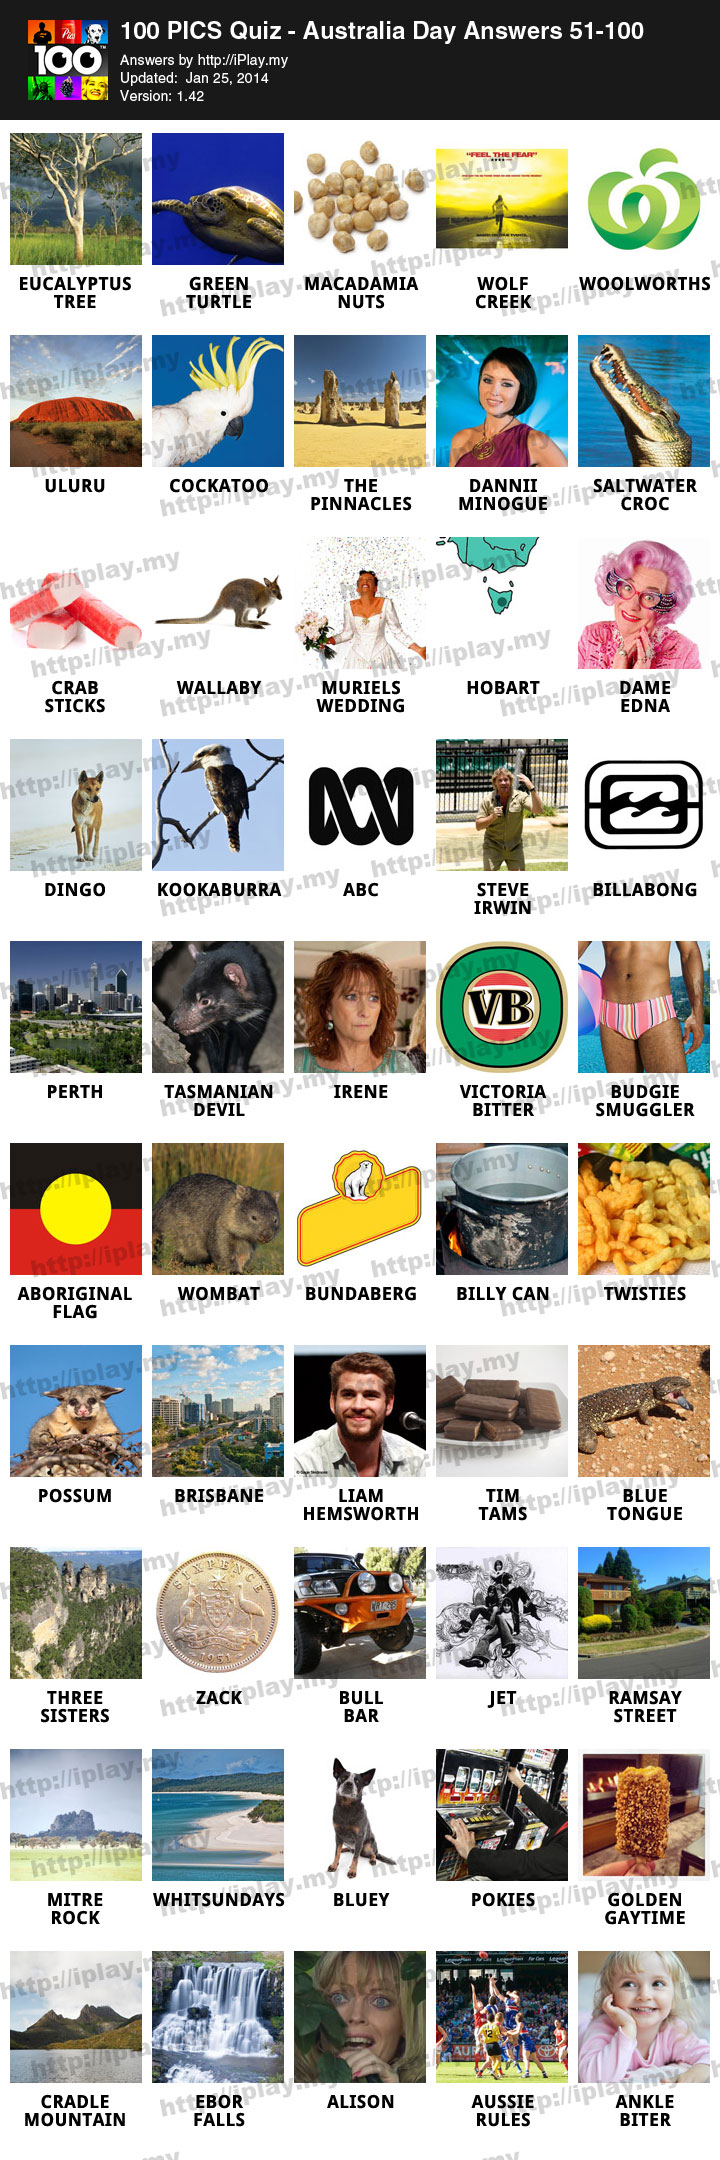 100-Pics-Quiz-Australia-Day-Answers-51-100